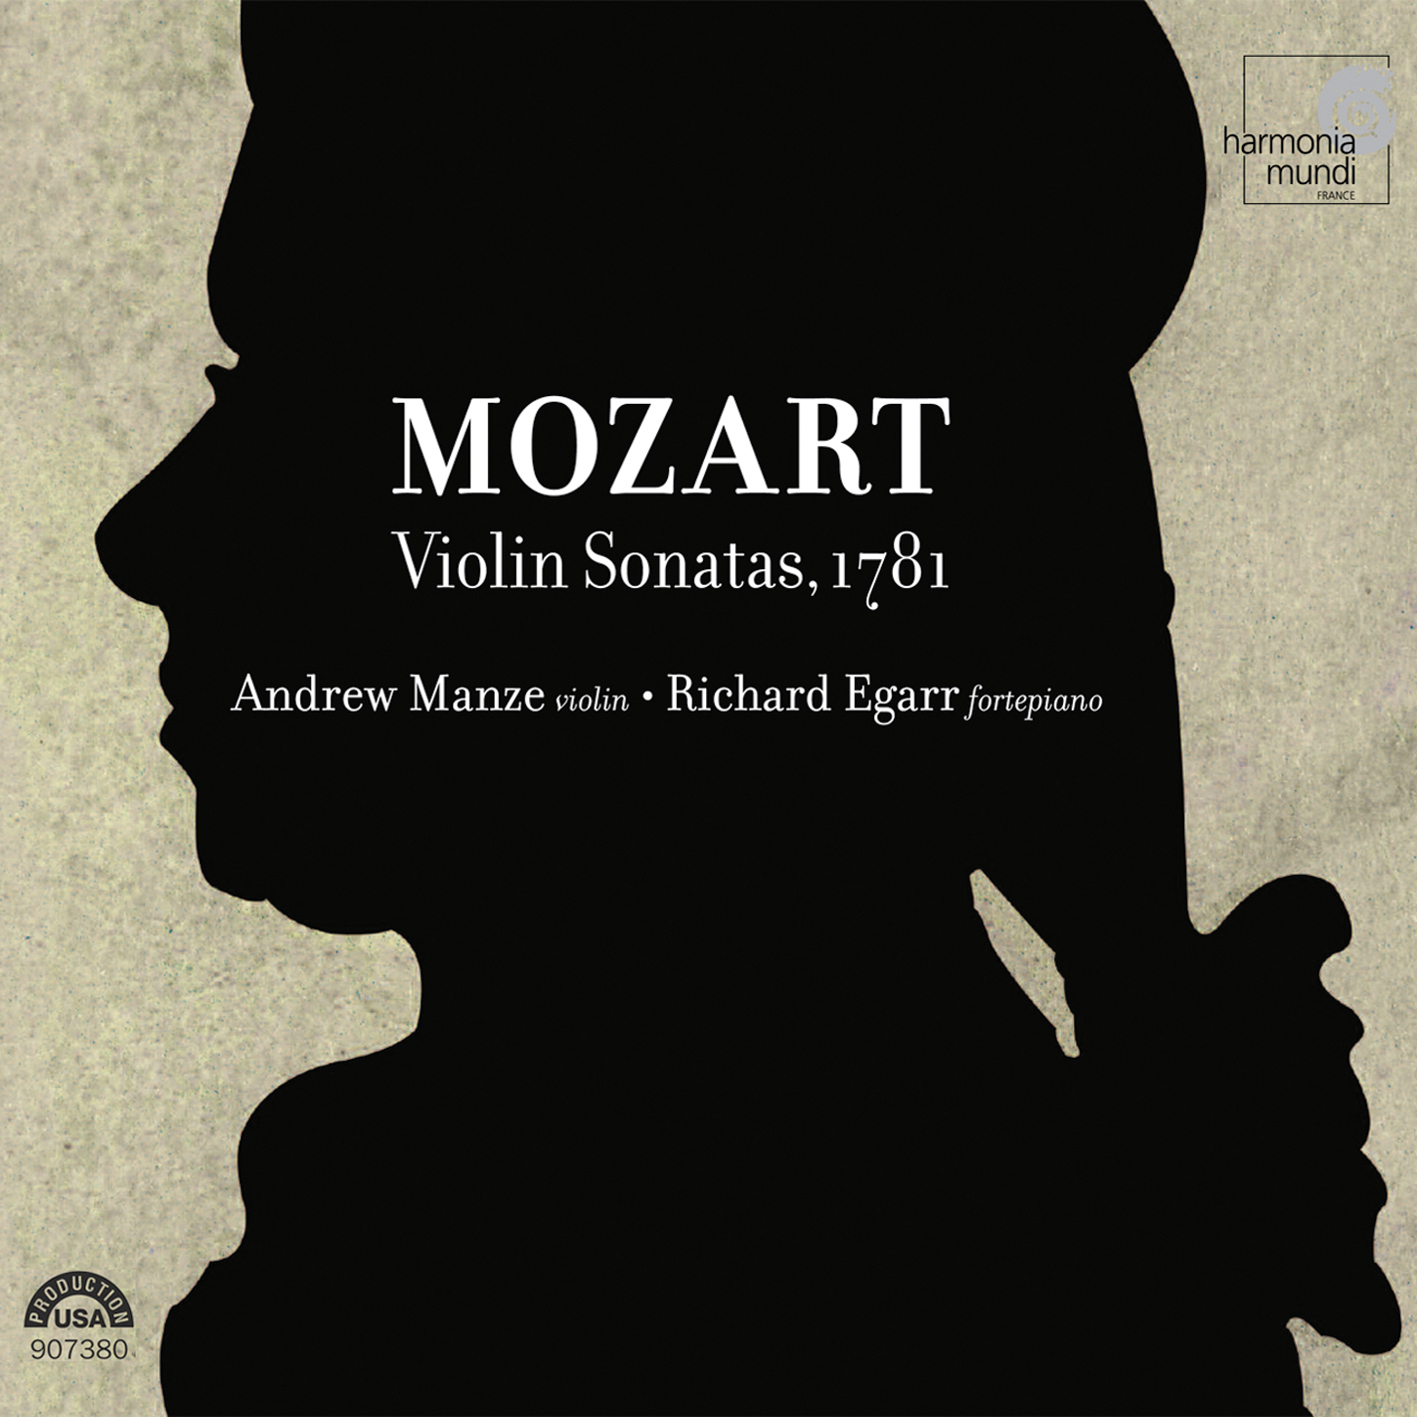 Sonata in C Major (fragment), K. 403: I. Allegro moderato